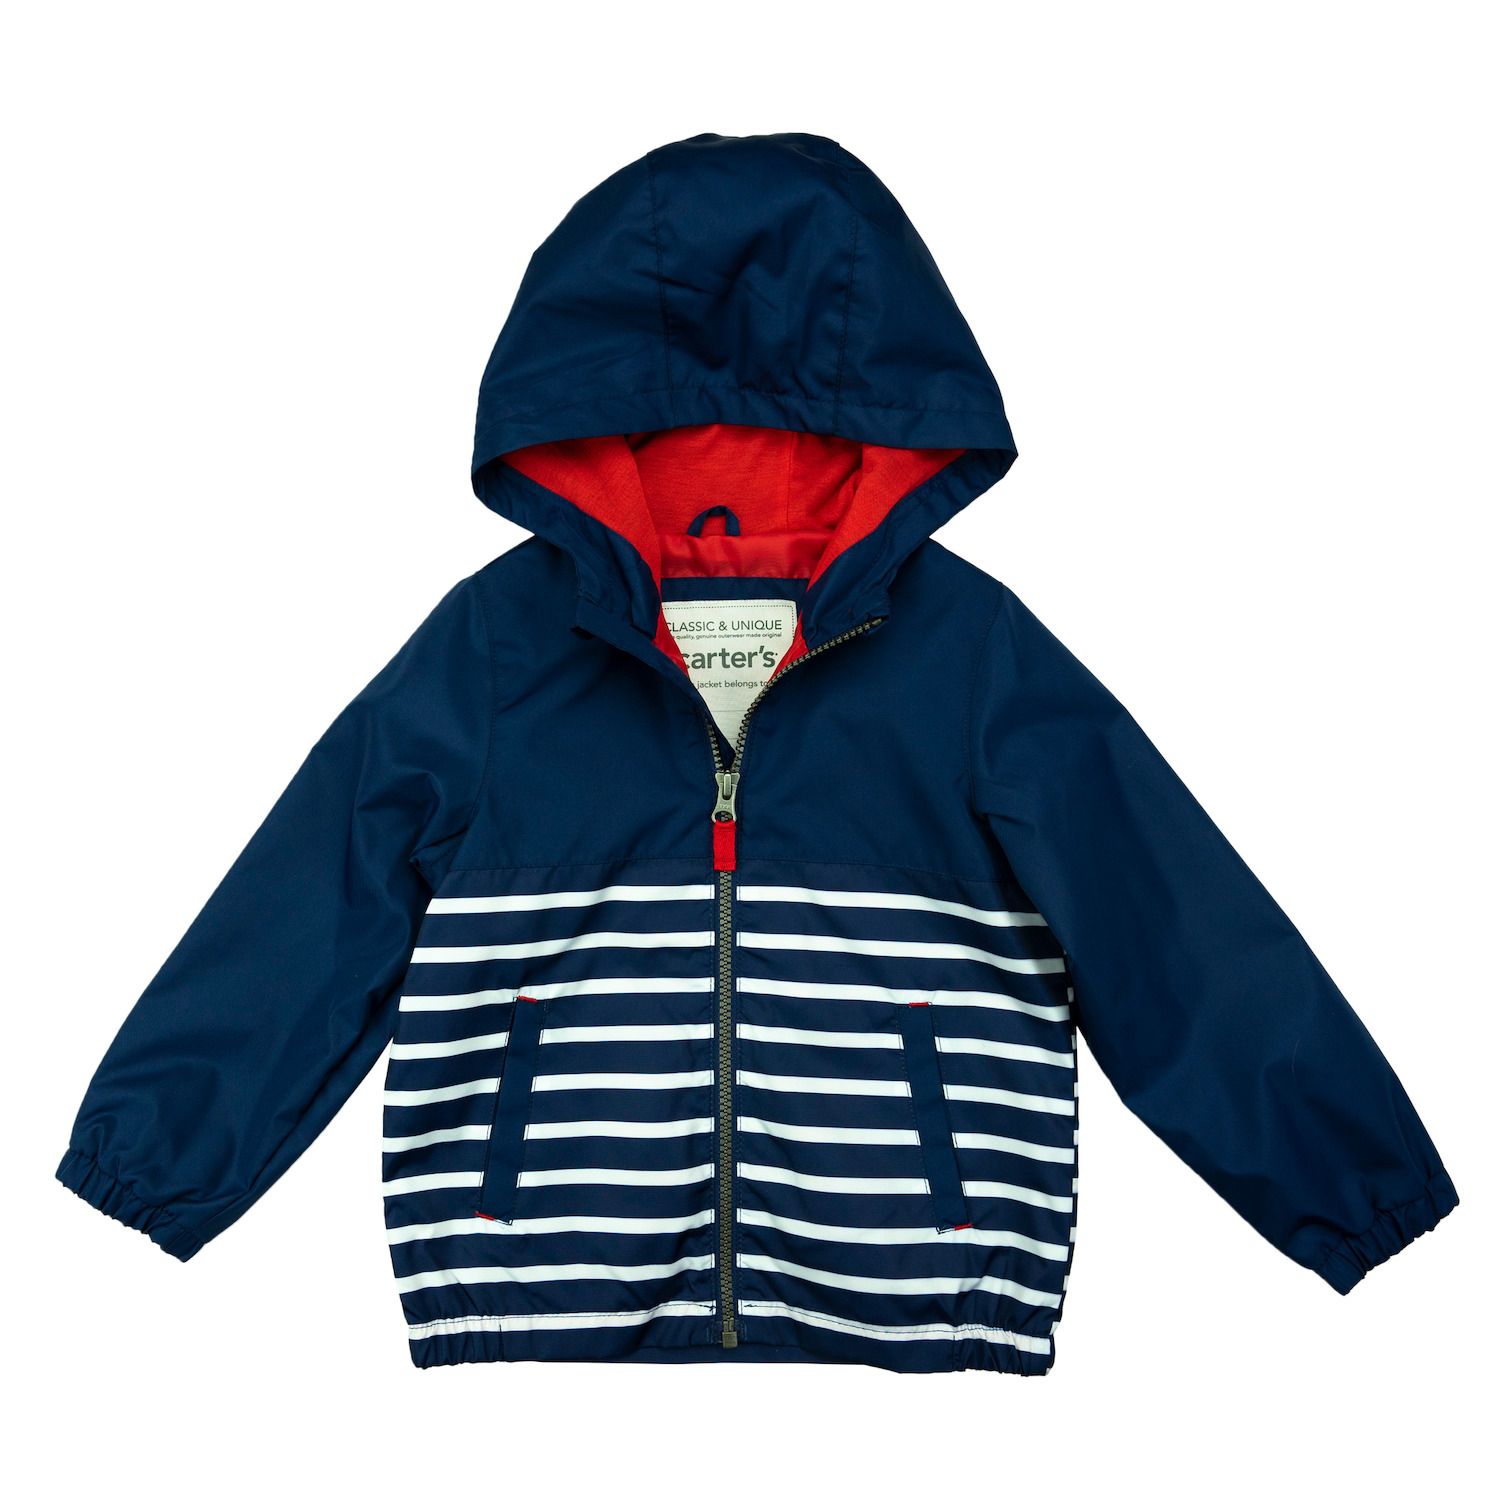 toddler boy hooded jacket